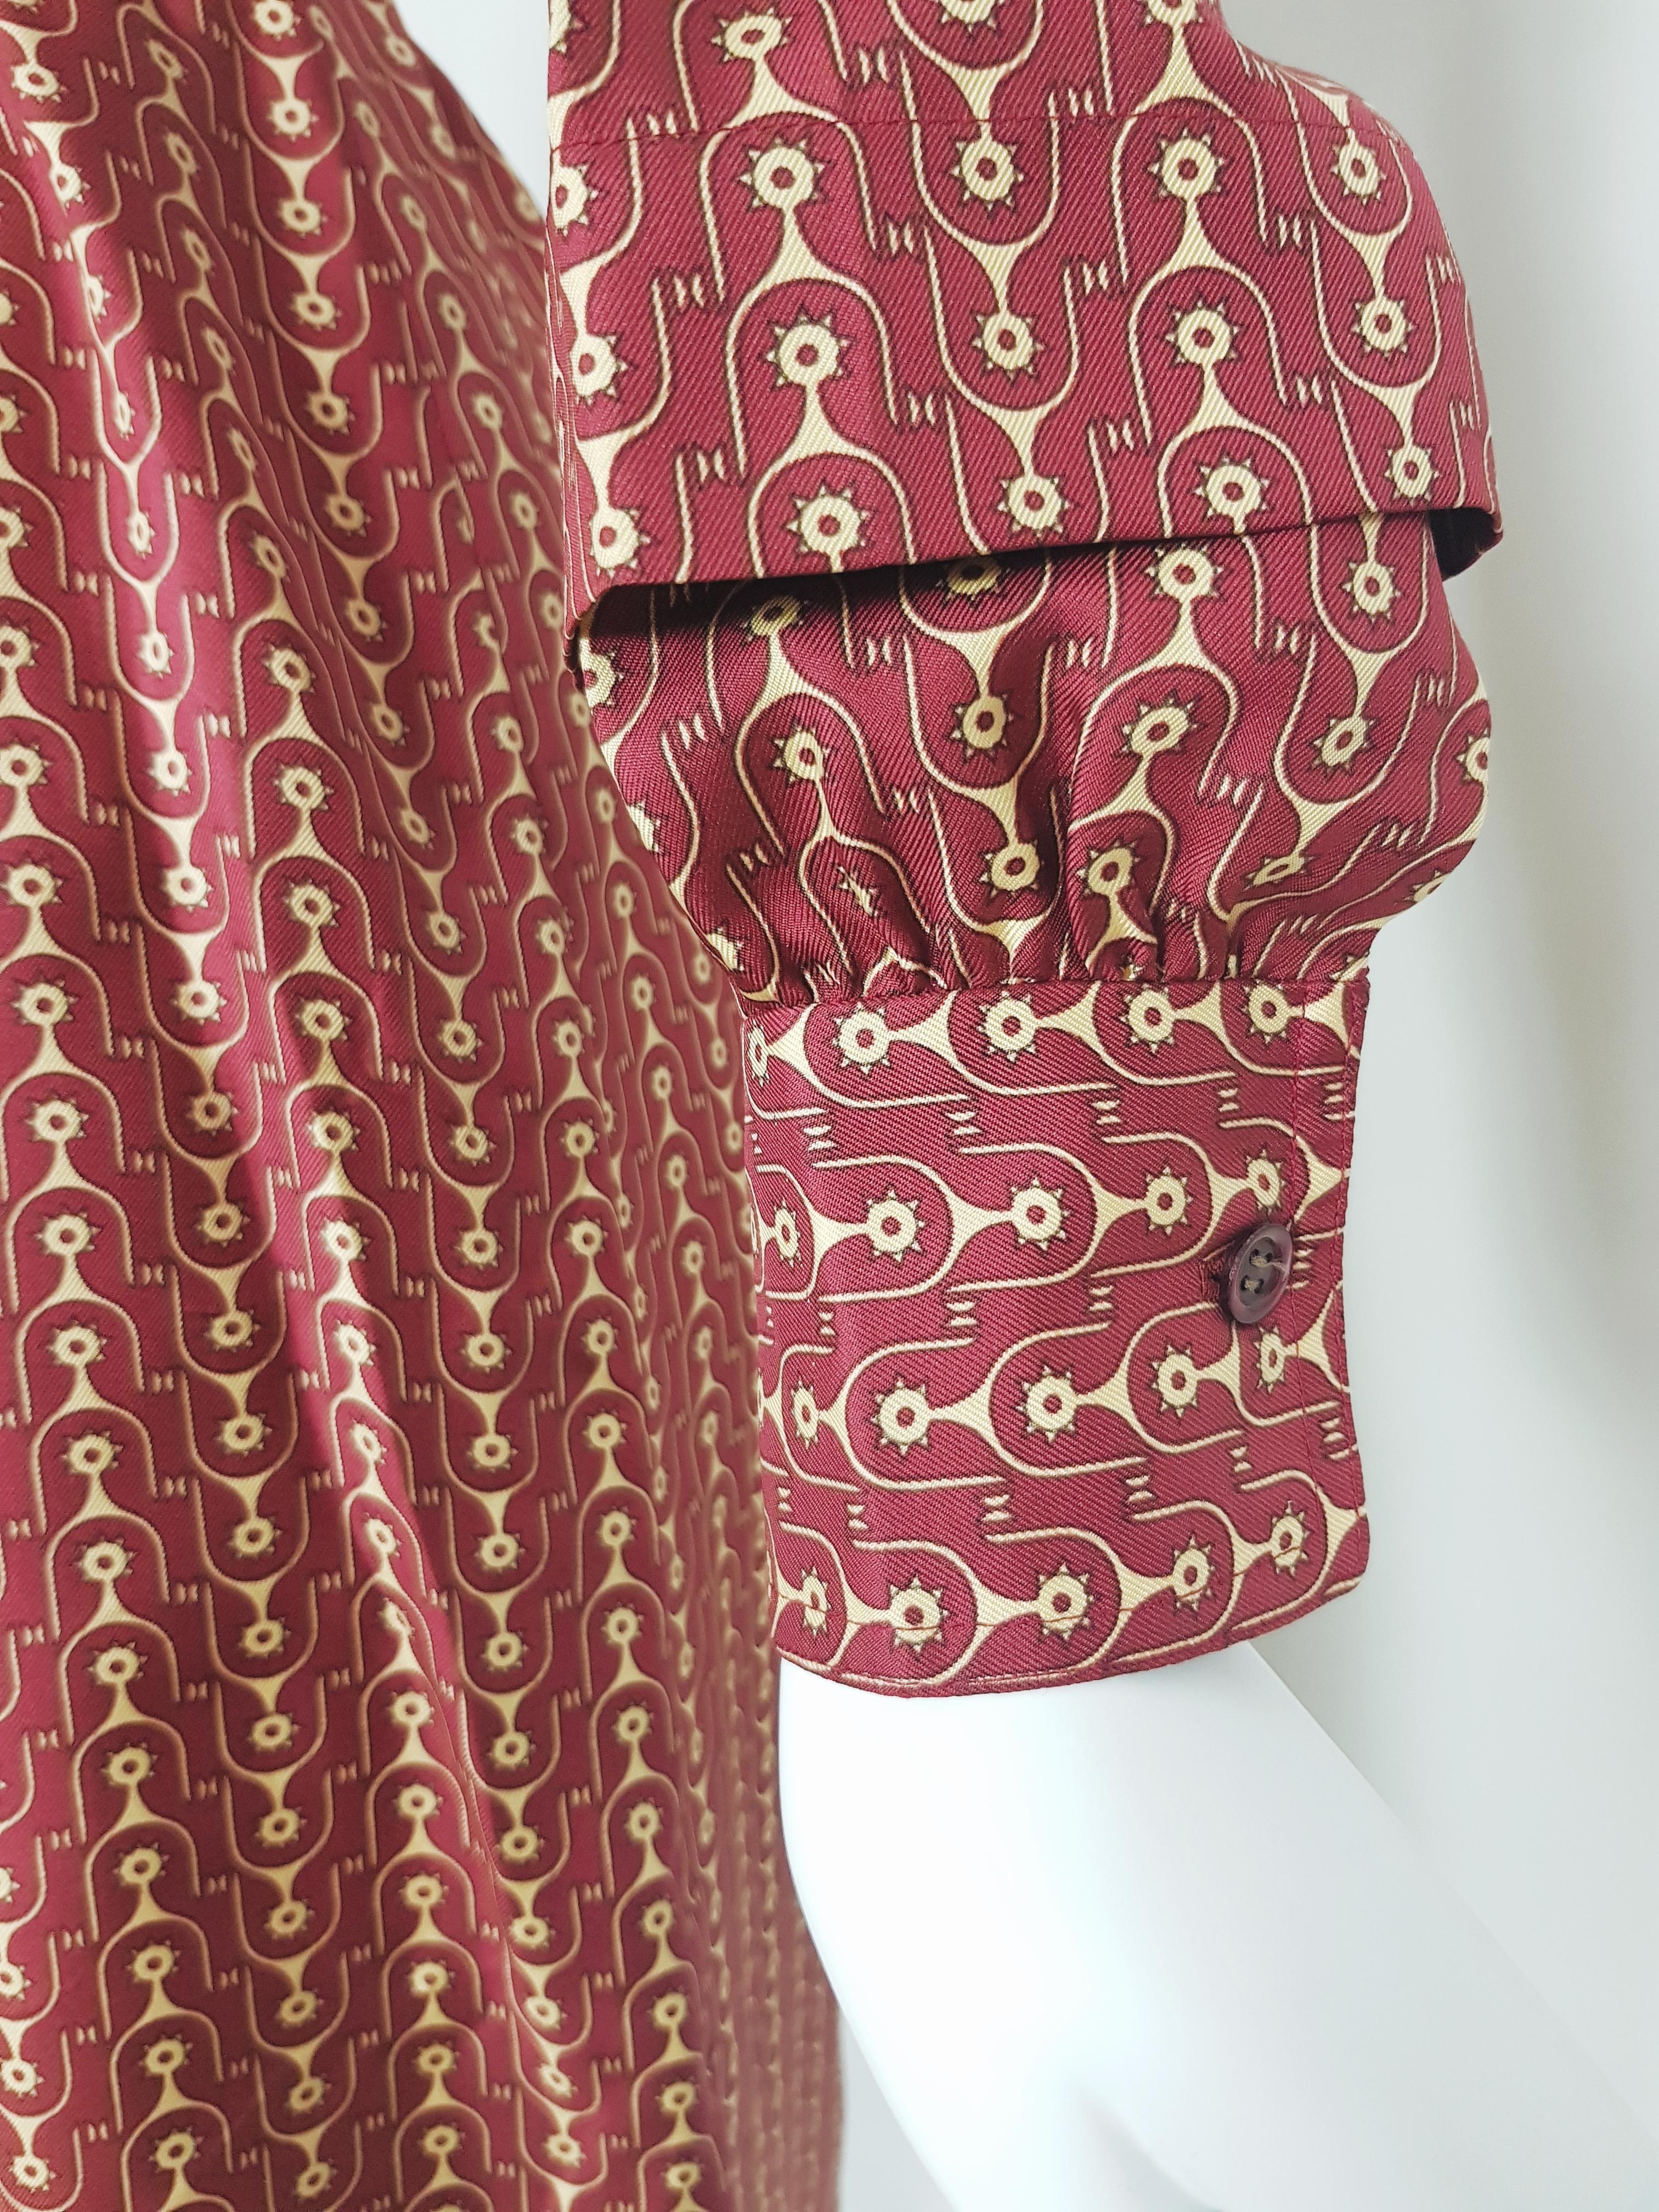 Women's HERMÈS Equestrian spur print silk dress, c. 1960s limited edition